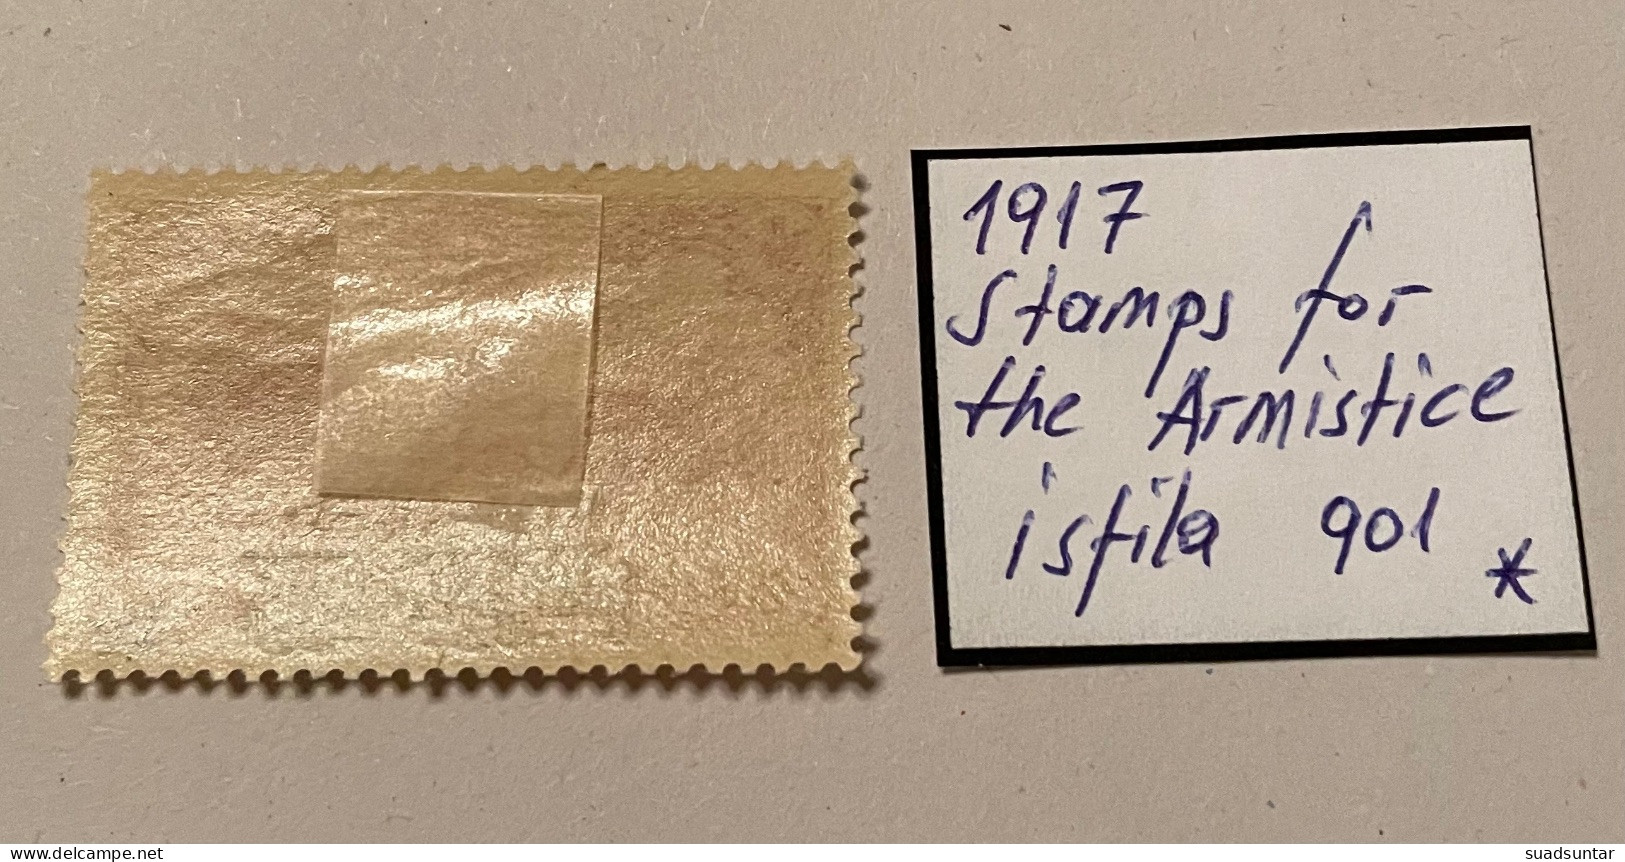 1919 Stamps For The Armistice MH Isfila 901 - Nuovi